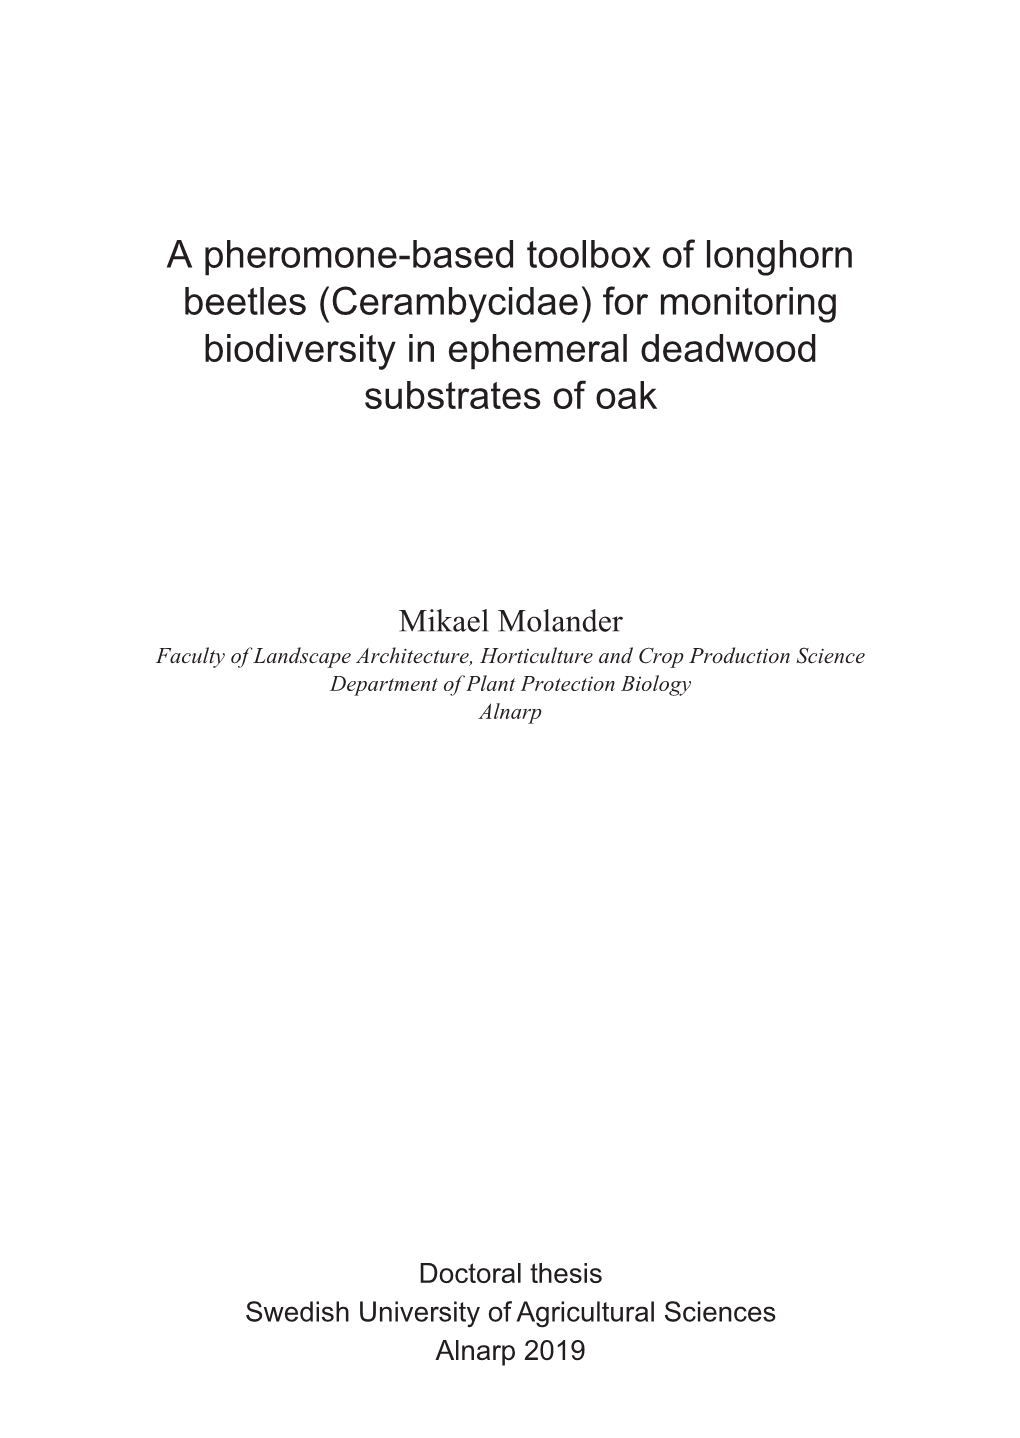 A Pheromone-Based Toolbox of Longhorn Beetles (Cerambycidae) for Monitoring Biodiversity in Ephemeral Deadwood Substrates of Oak